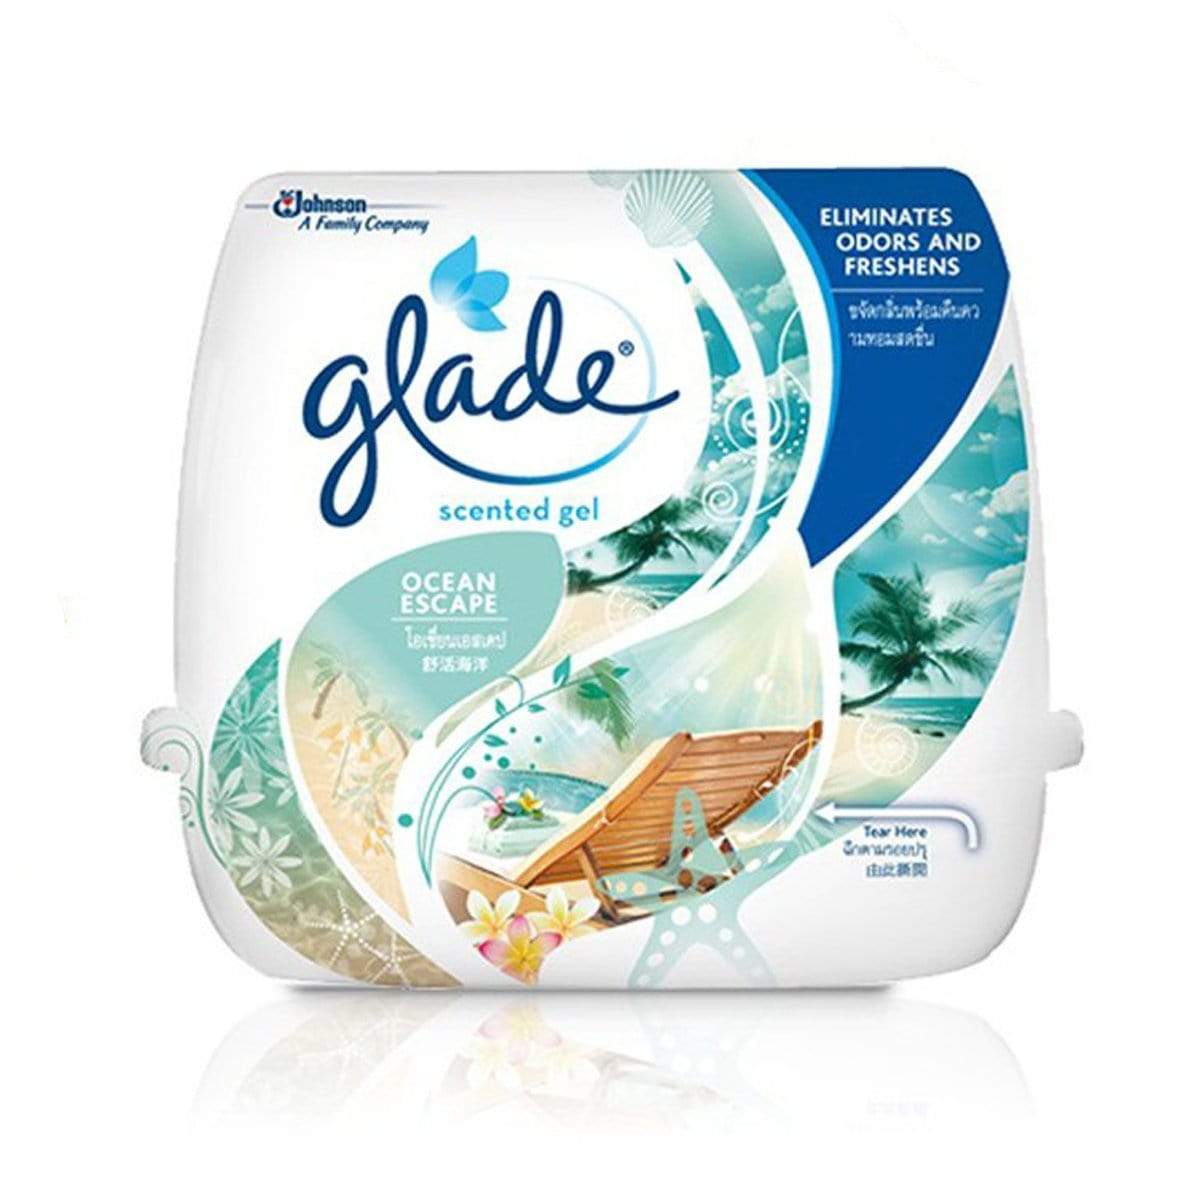 Glade Scented Gel Ocean Escape Air Freshener 180g